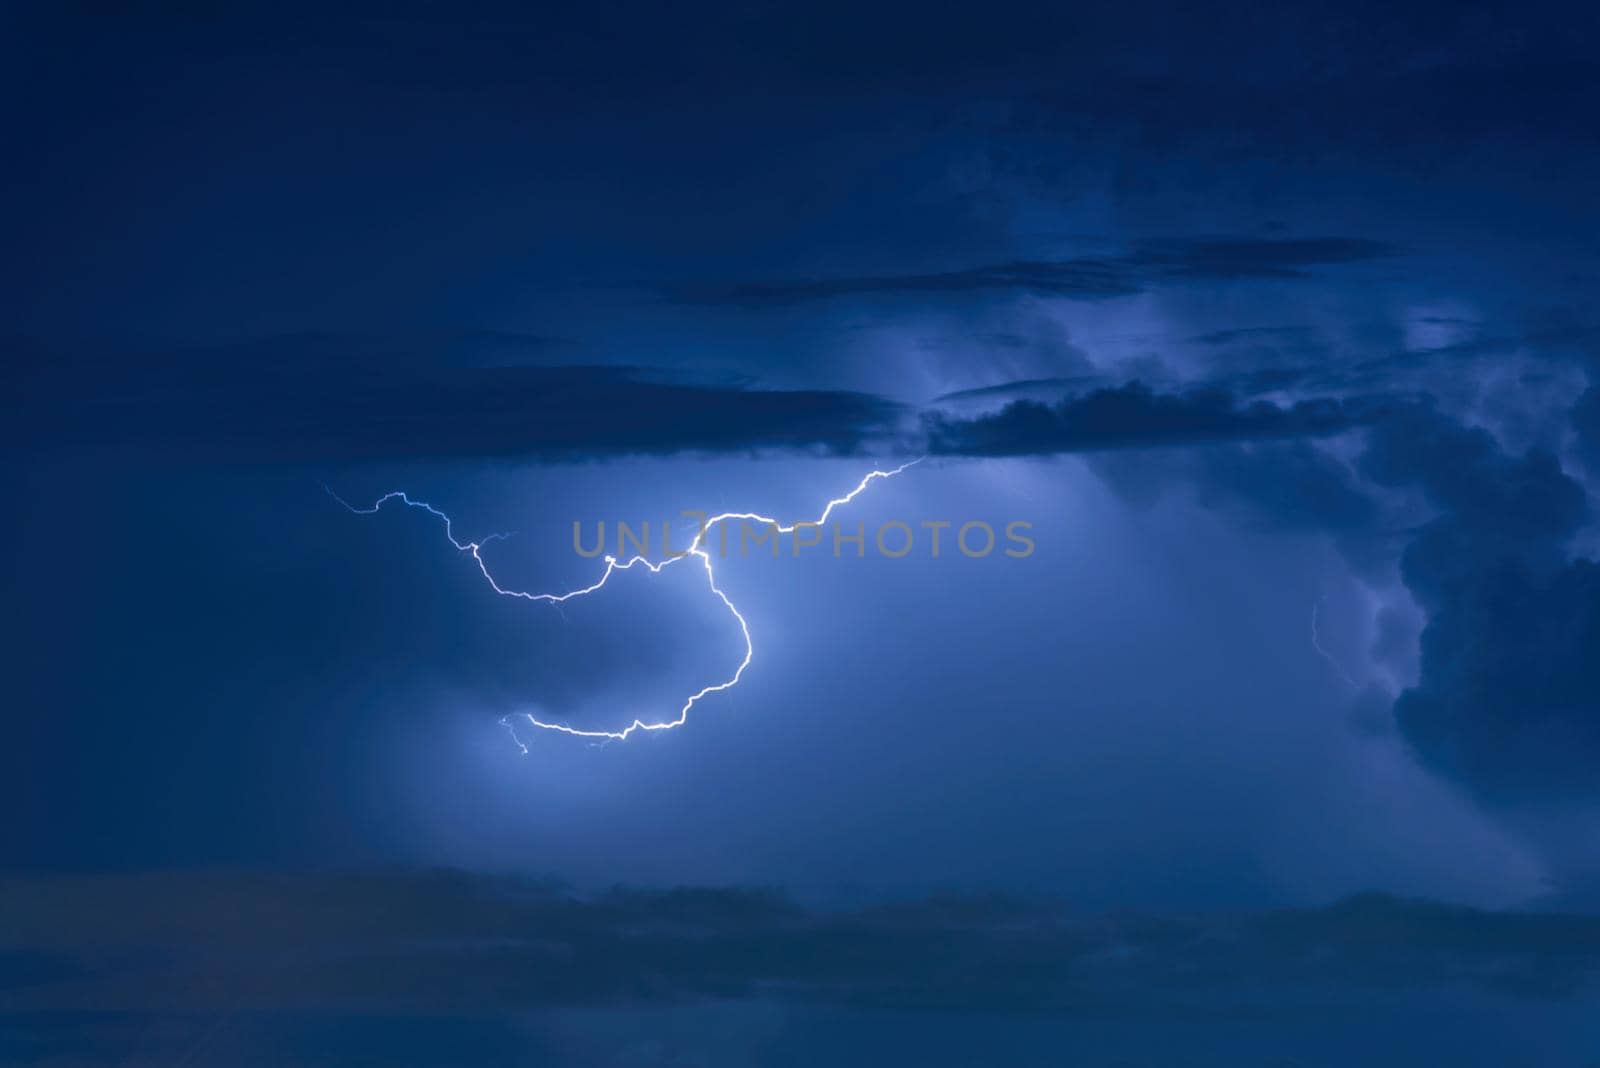 Thunder storm lightning strike on the dark cloudy sky background at night. by Nuamfolio